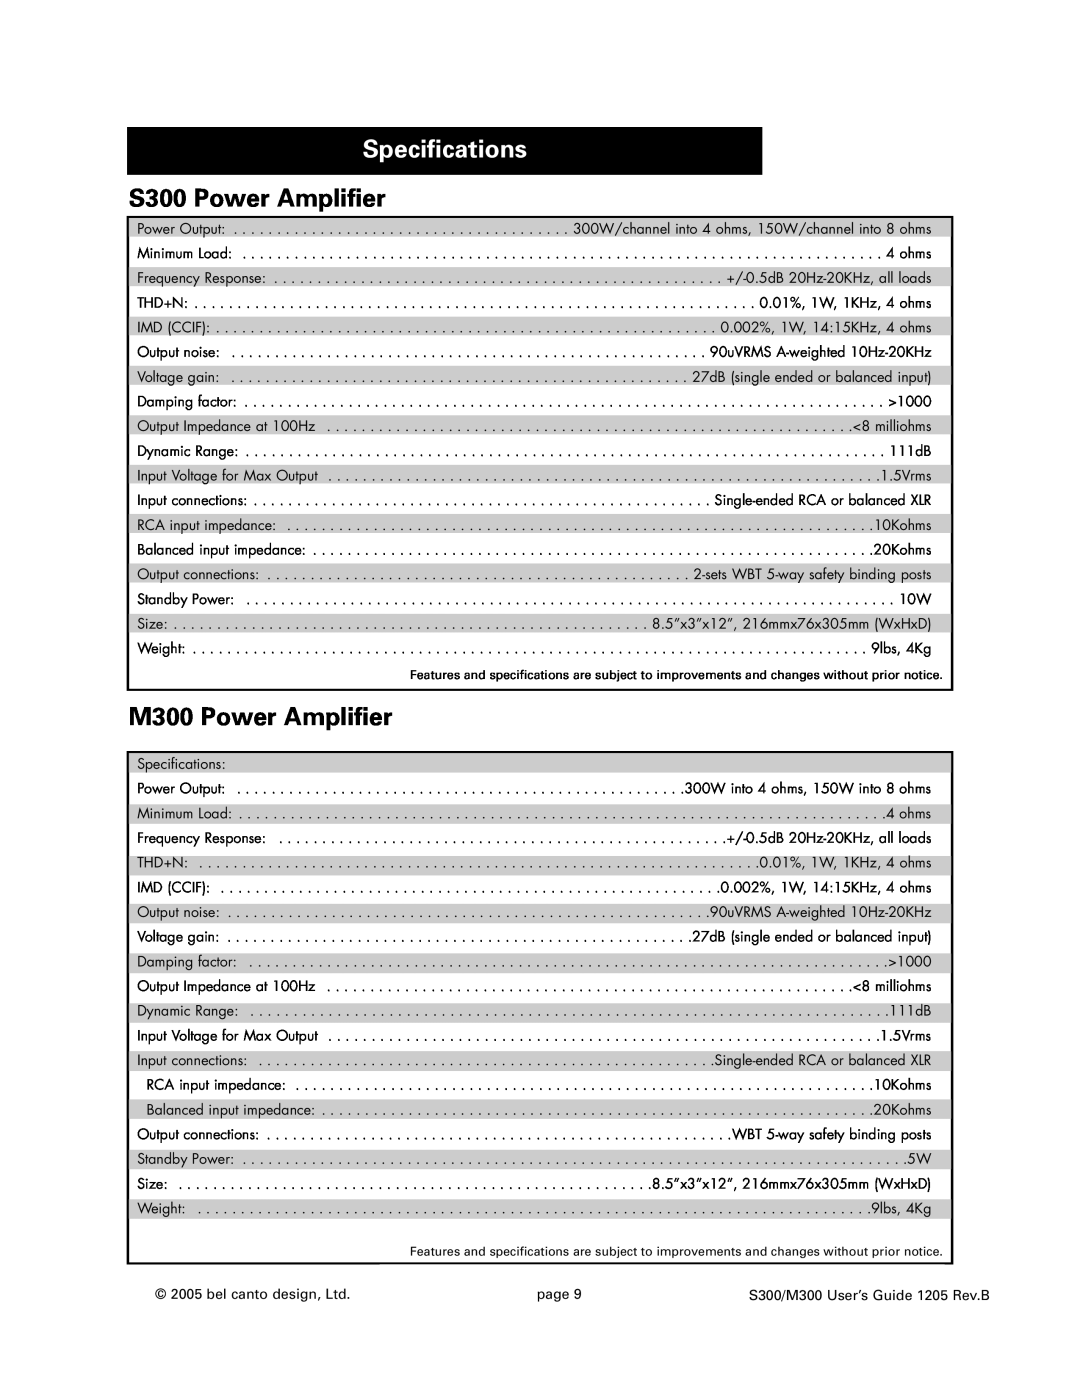 Bel Canto Design manual Specifications, S300 Power Amplifier, M300 Power Amplifier 